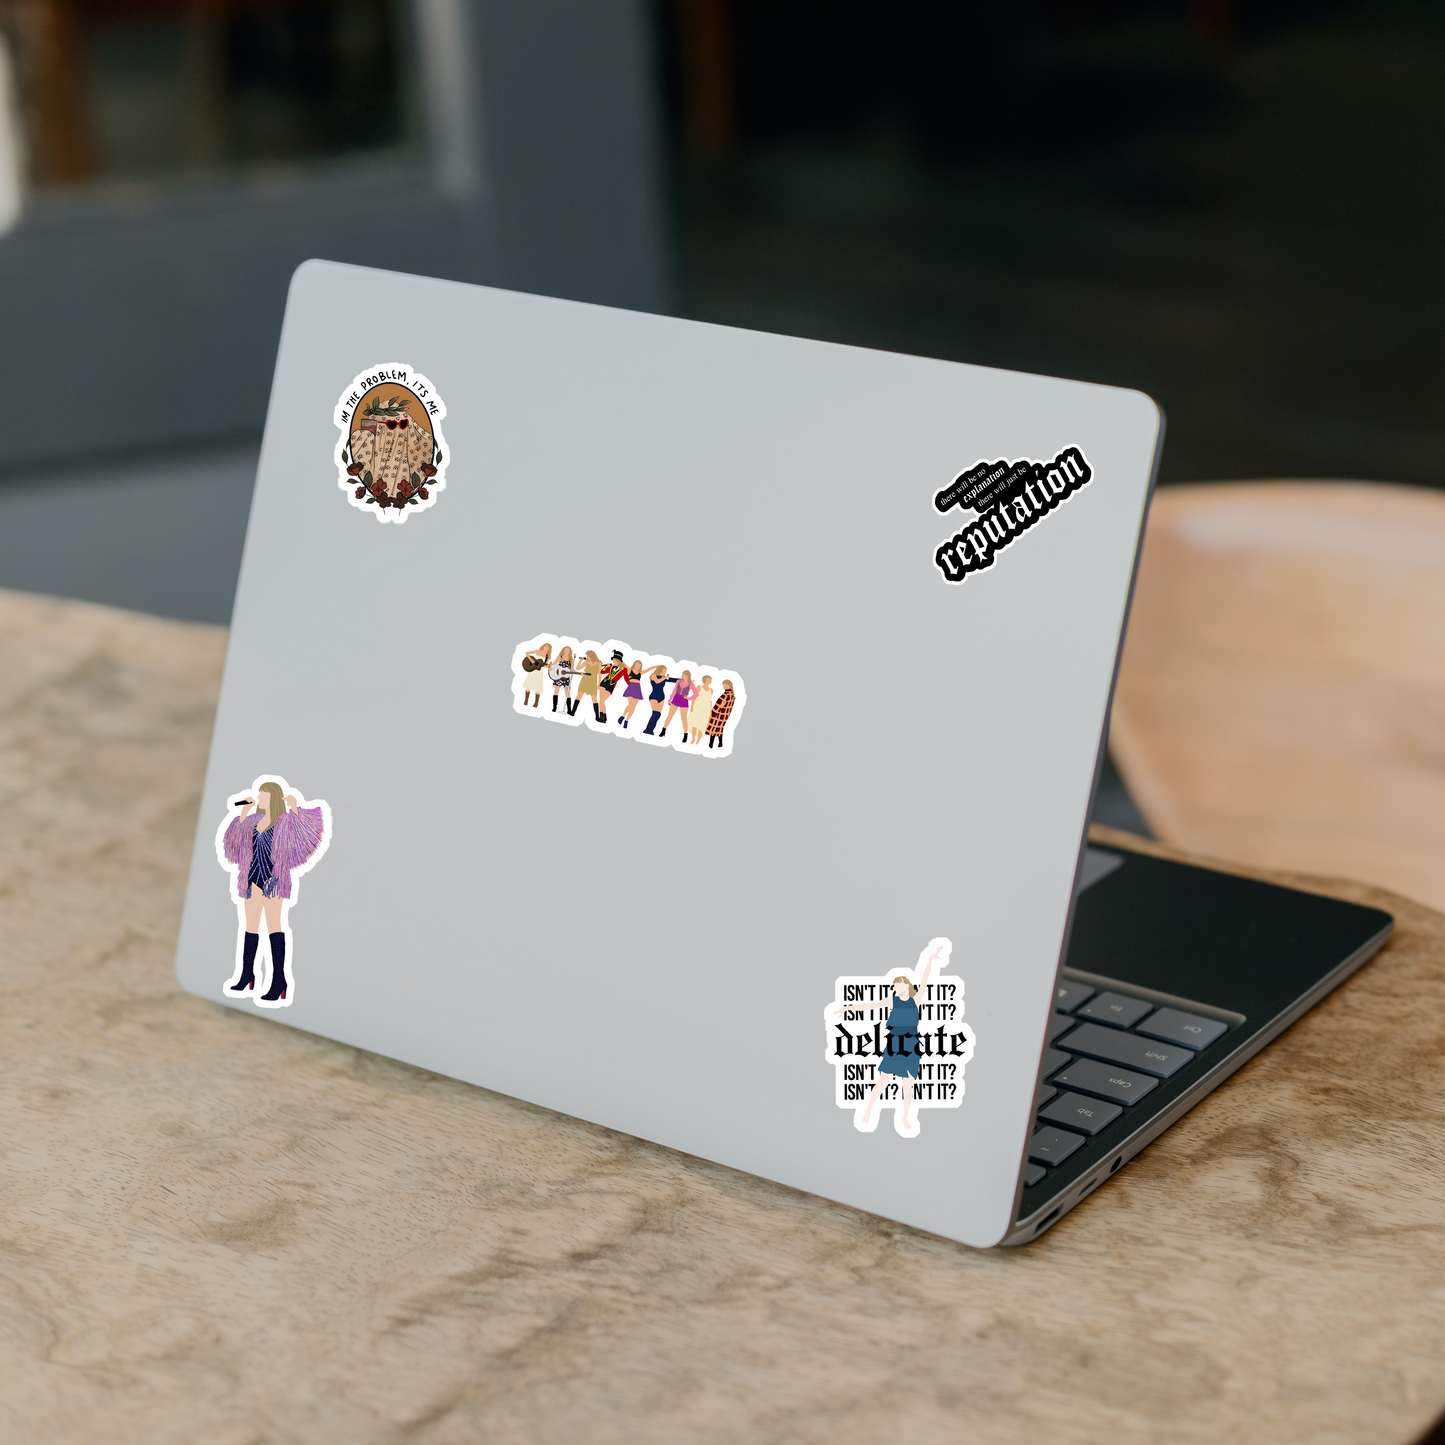 Taylor swift laptop stickers